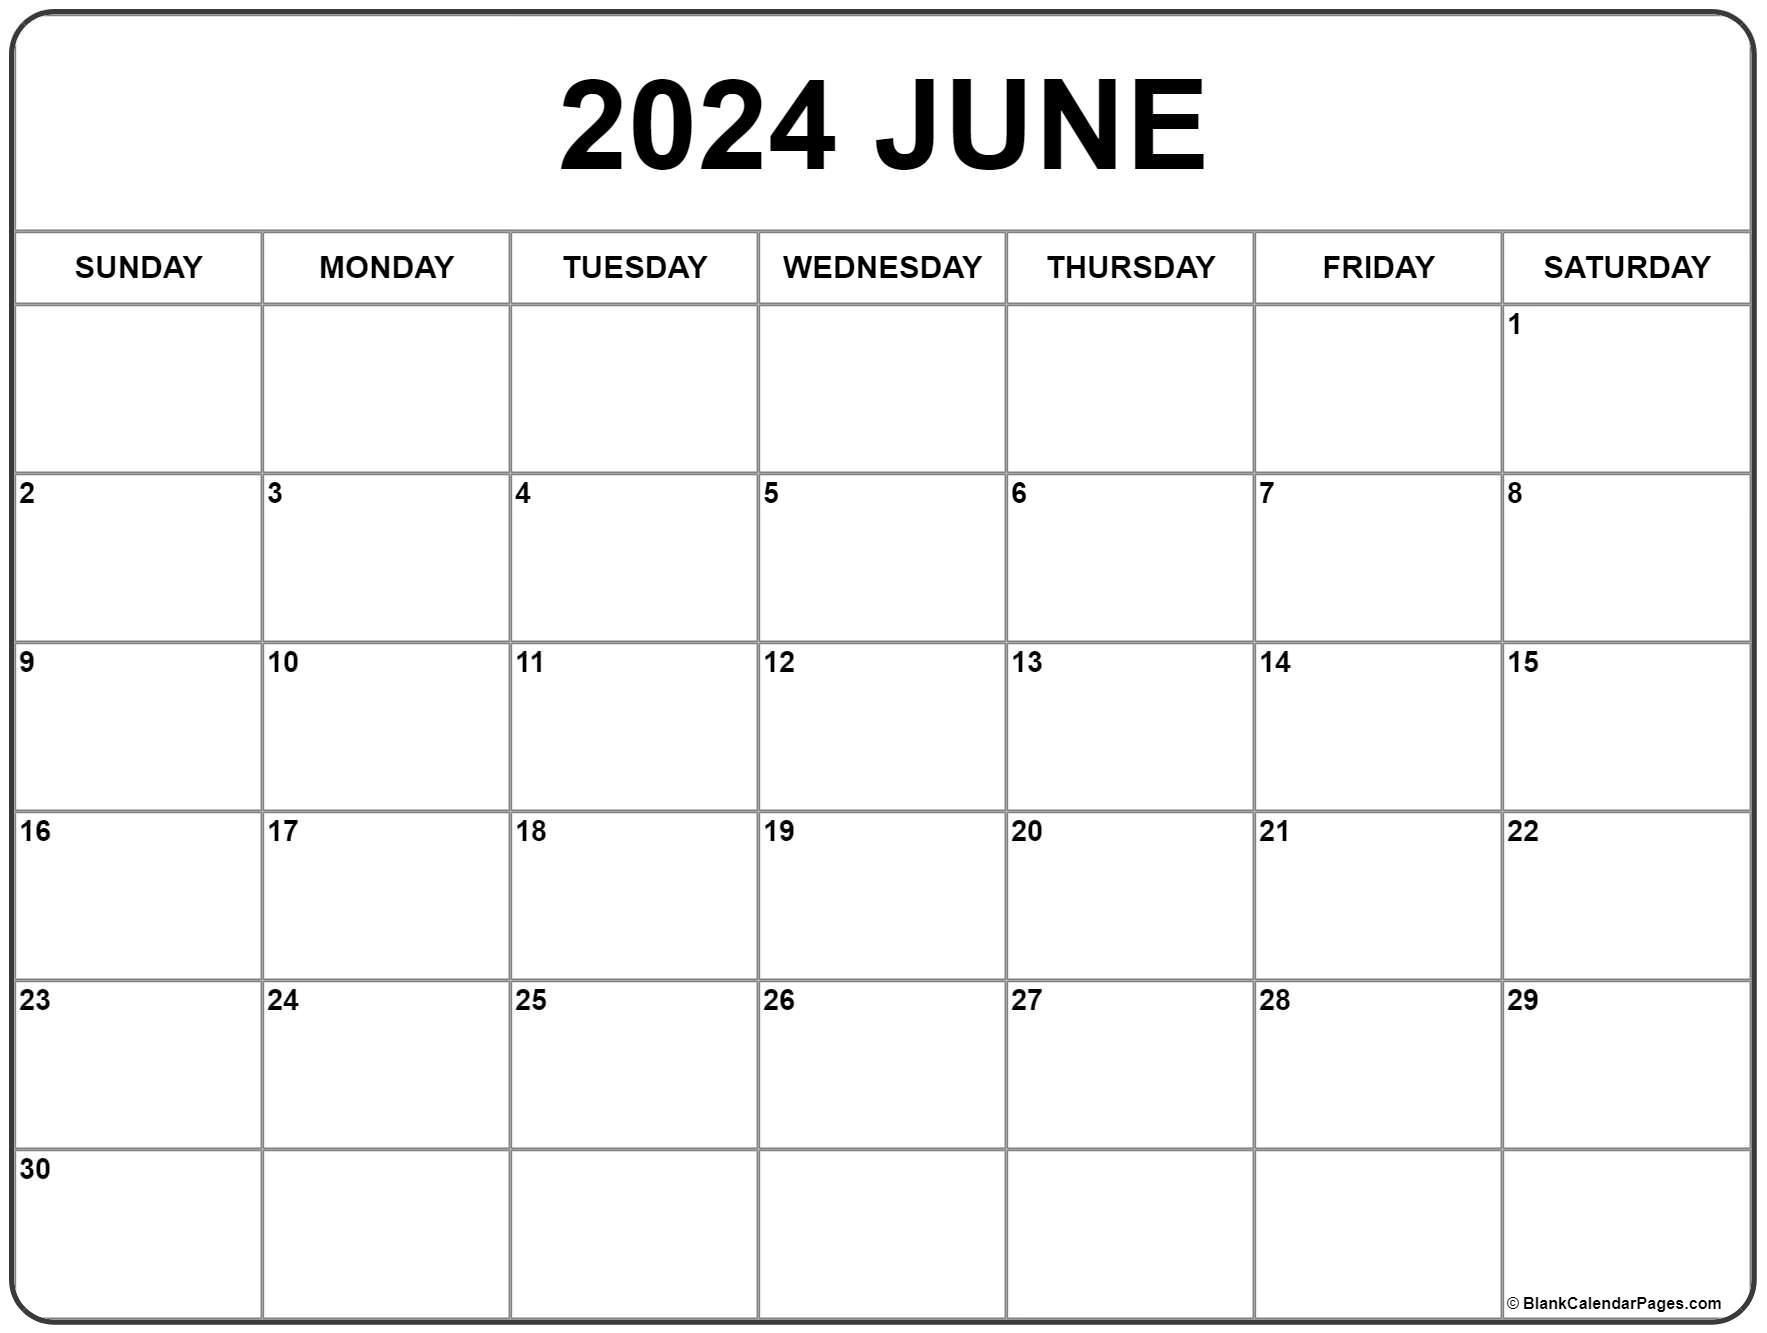 June 2020 calendar | free printable monthly calendars